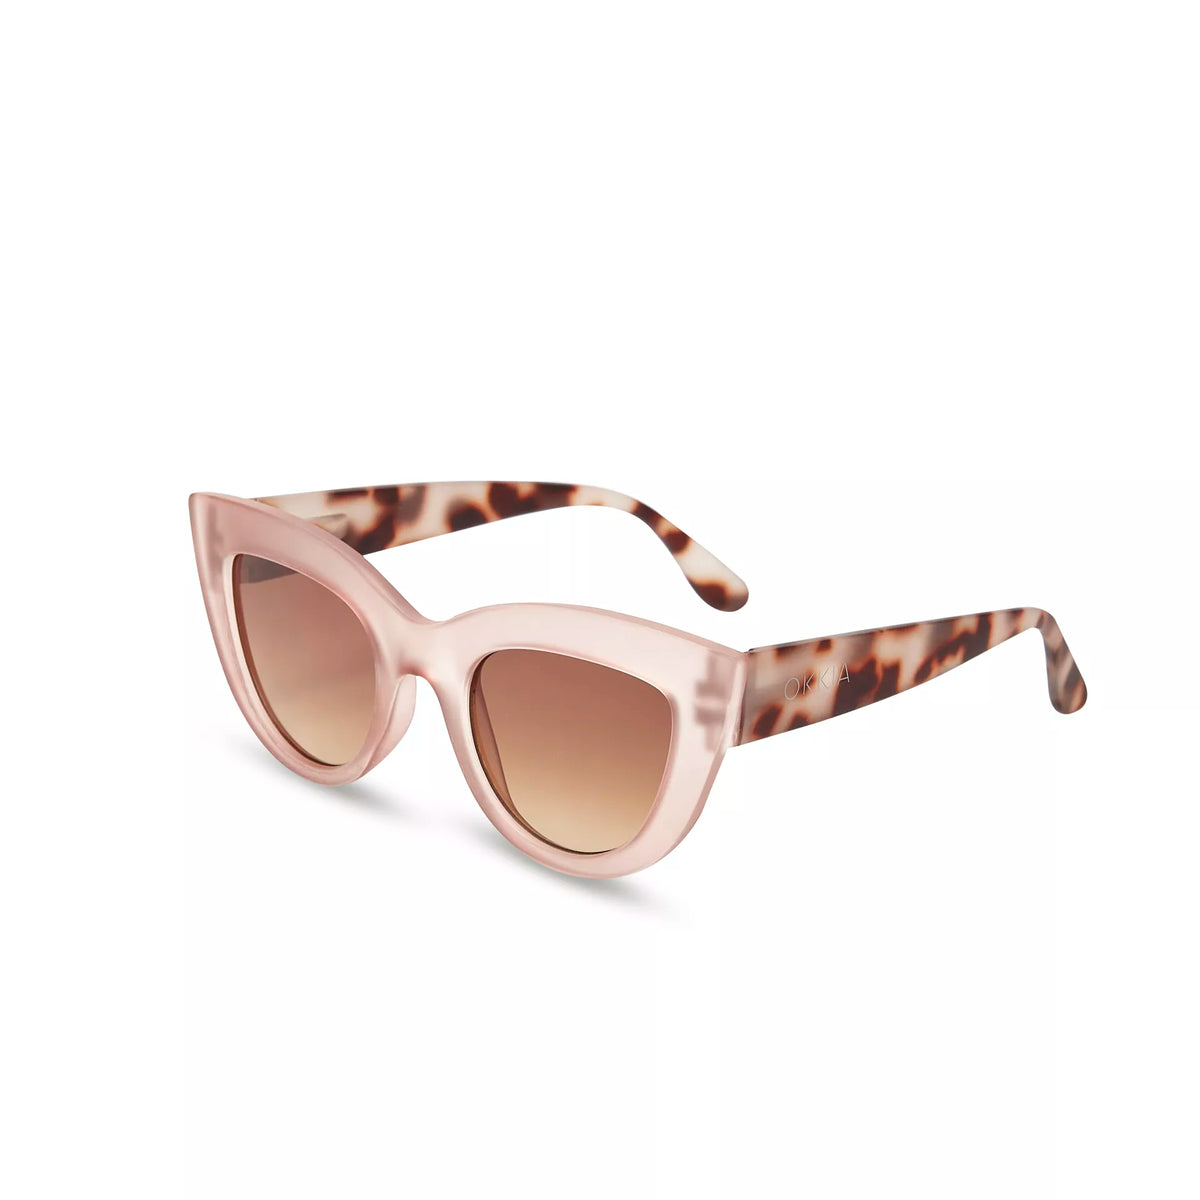 Okkia - CLAUDIA Sunglasses - Pink